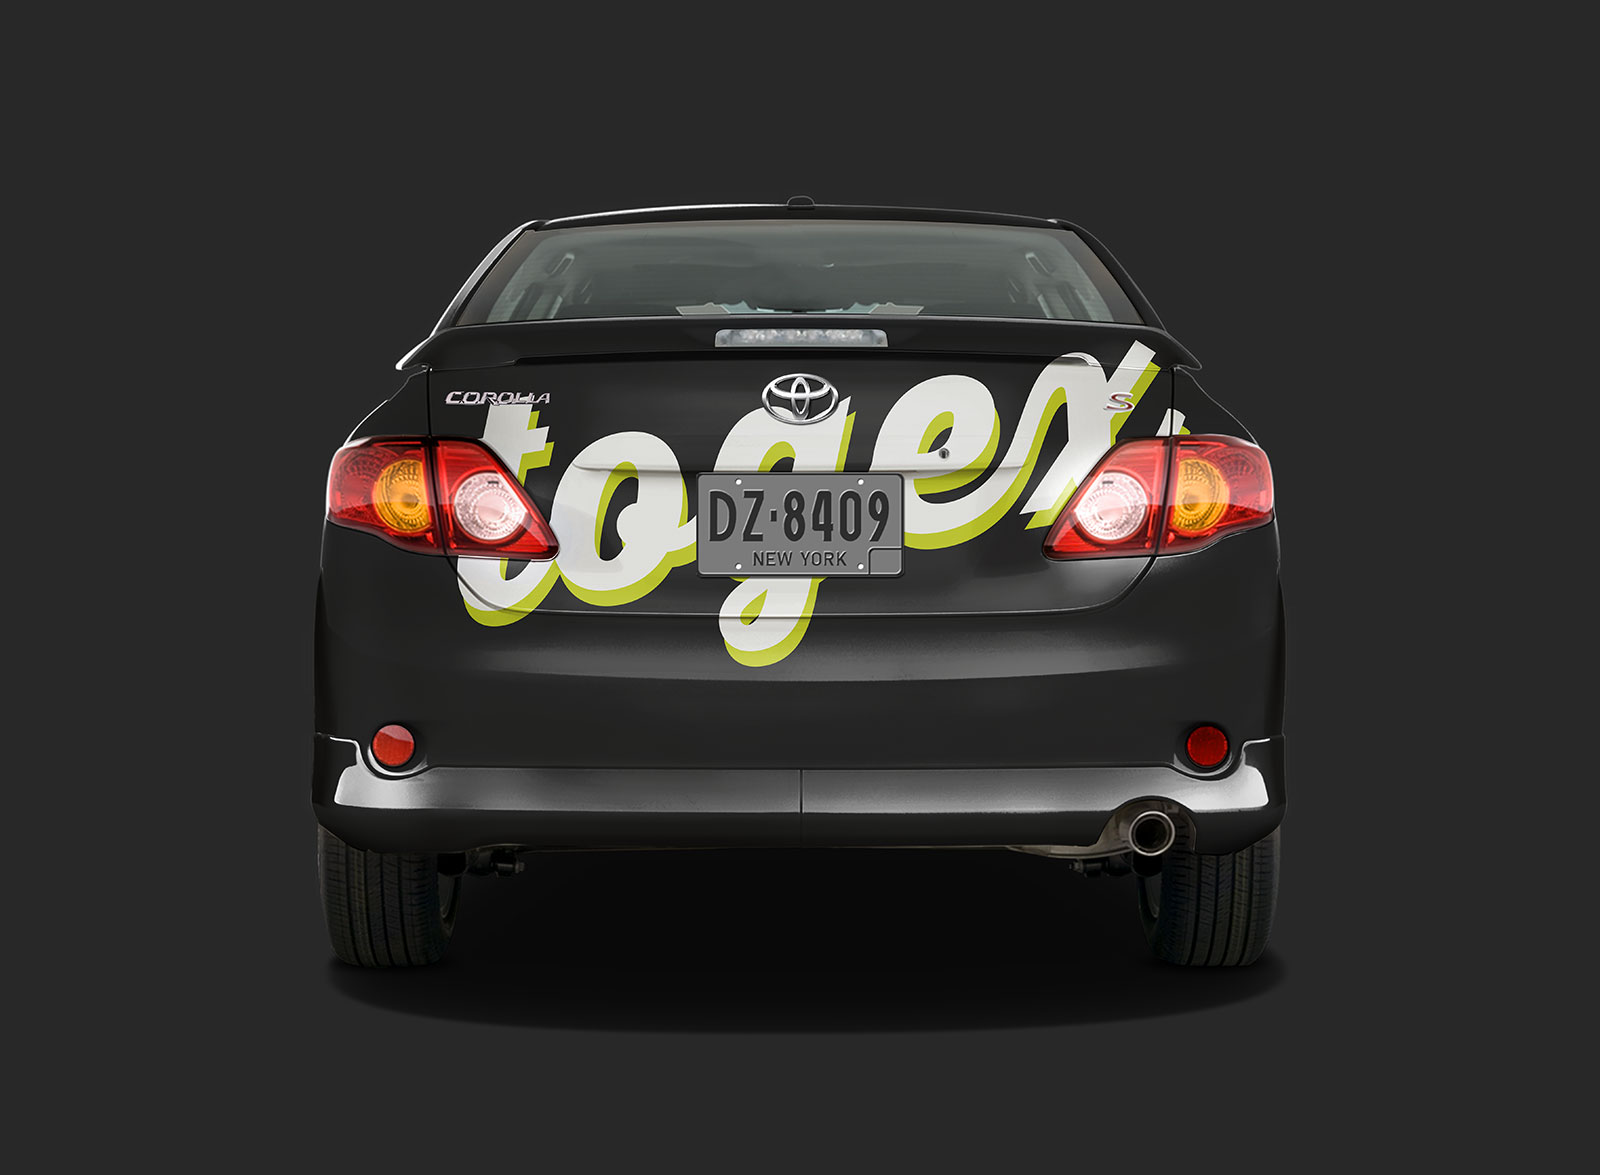 Free-Toyota-Corolla-Car-Branding-Mockup-PSD-4